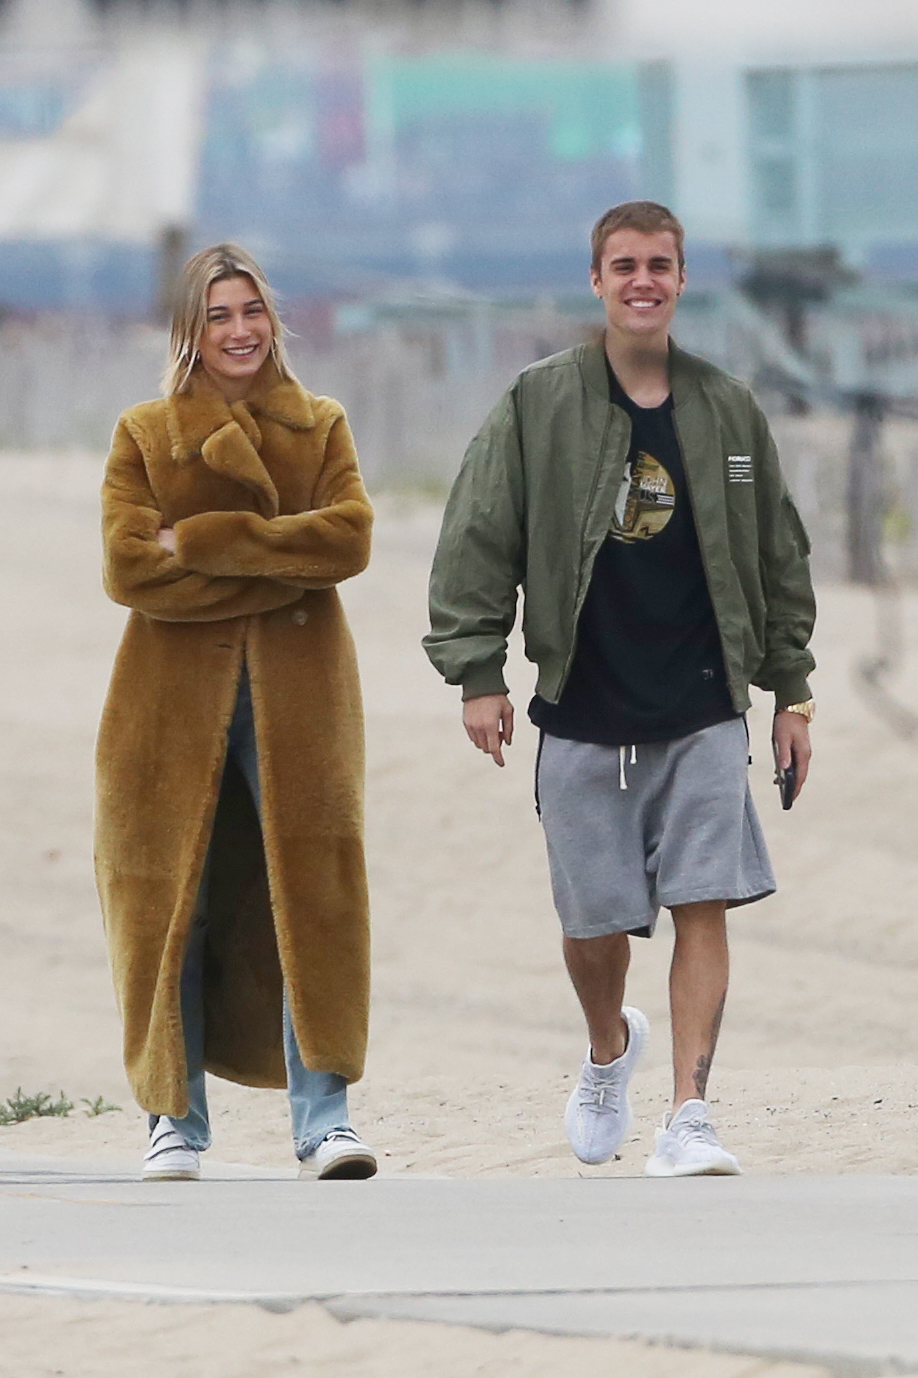 Justin Bieber Nude On The Beach - Justin Bieber And Hailey Baldwin Enjoy A Romantic Stroll On The Beach